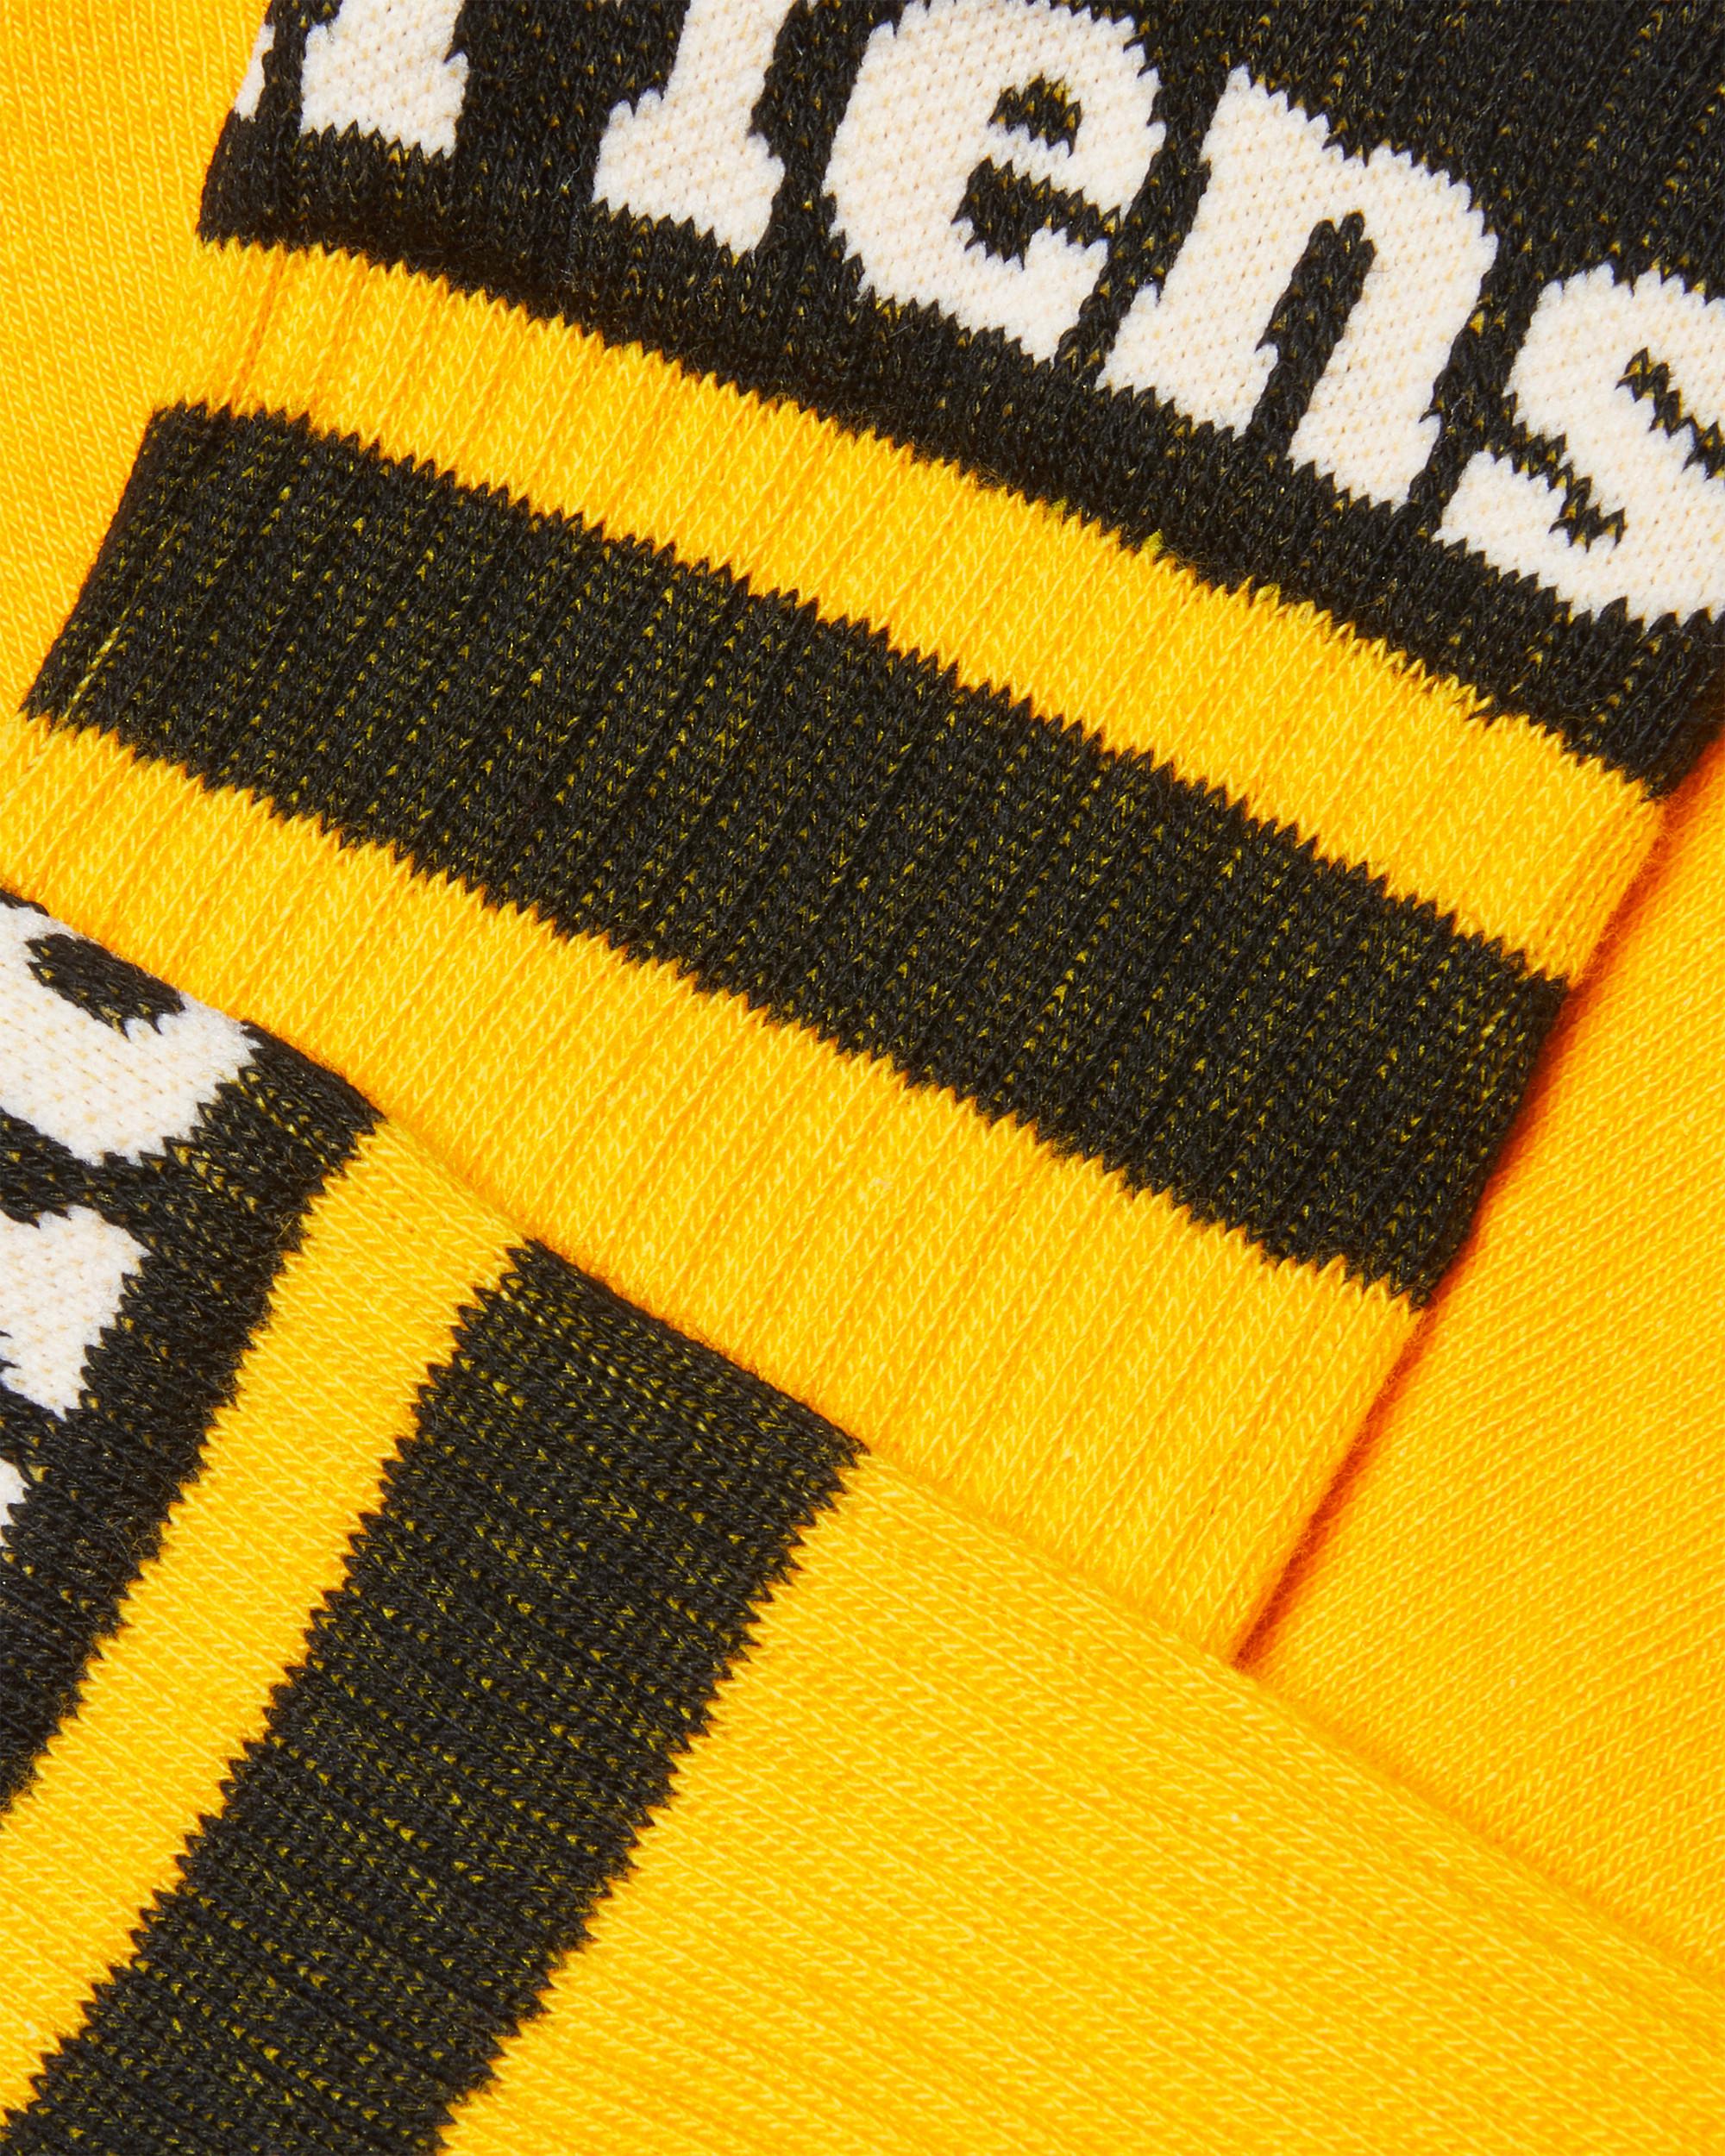 Athletic Logo Organic Cotton Blend Socks in Yellow